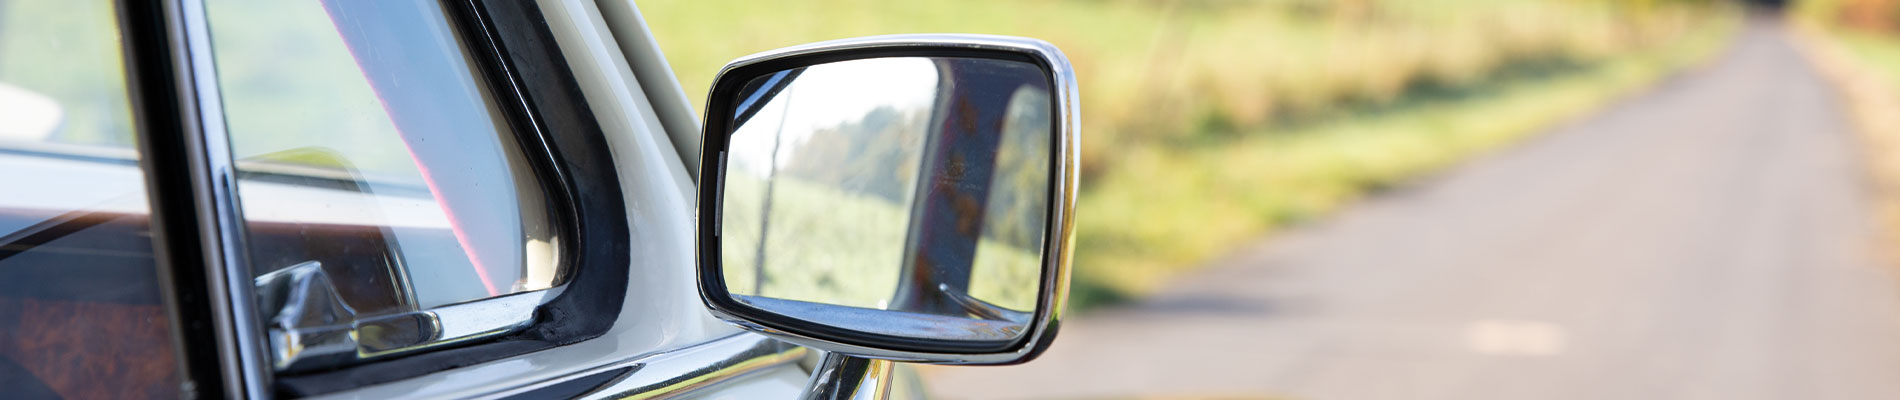 ZERMEA Rückspiegelkappe Auto Rückansicht Tür Außenspiegel